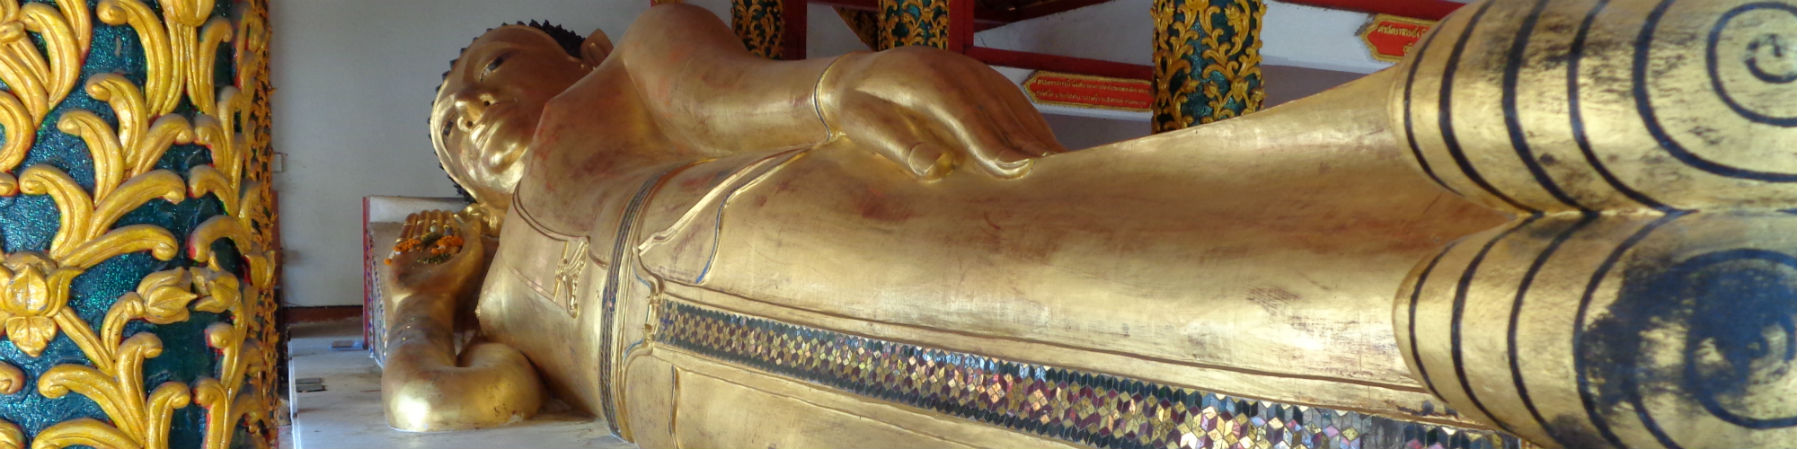 Reclining Buddha at Wat Pong Sanuk Nua, Lampang